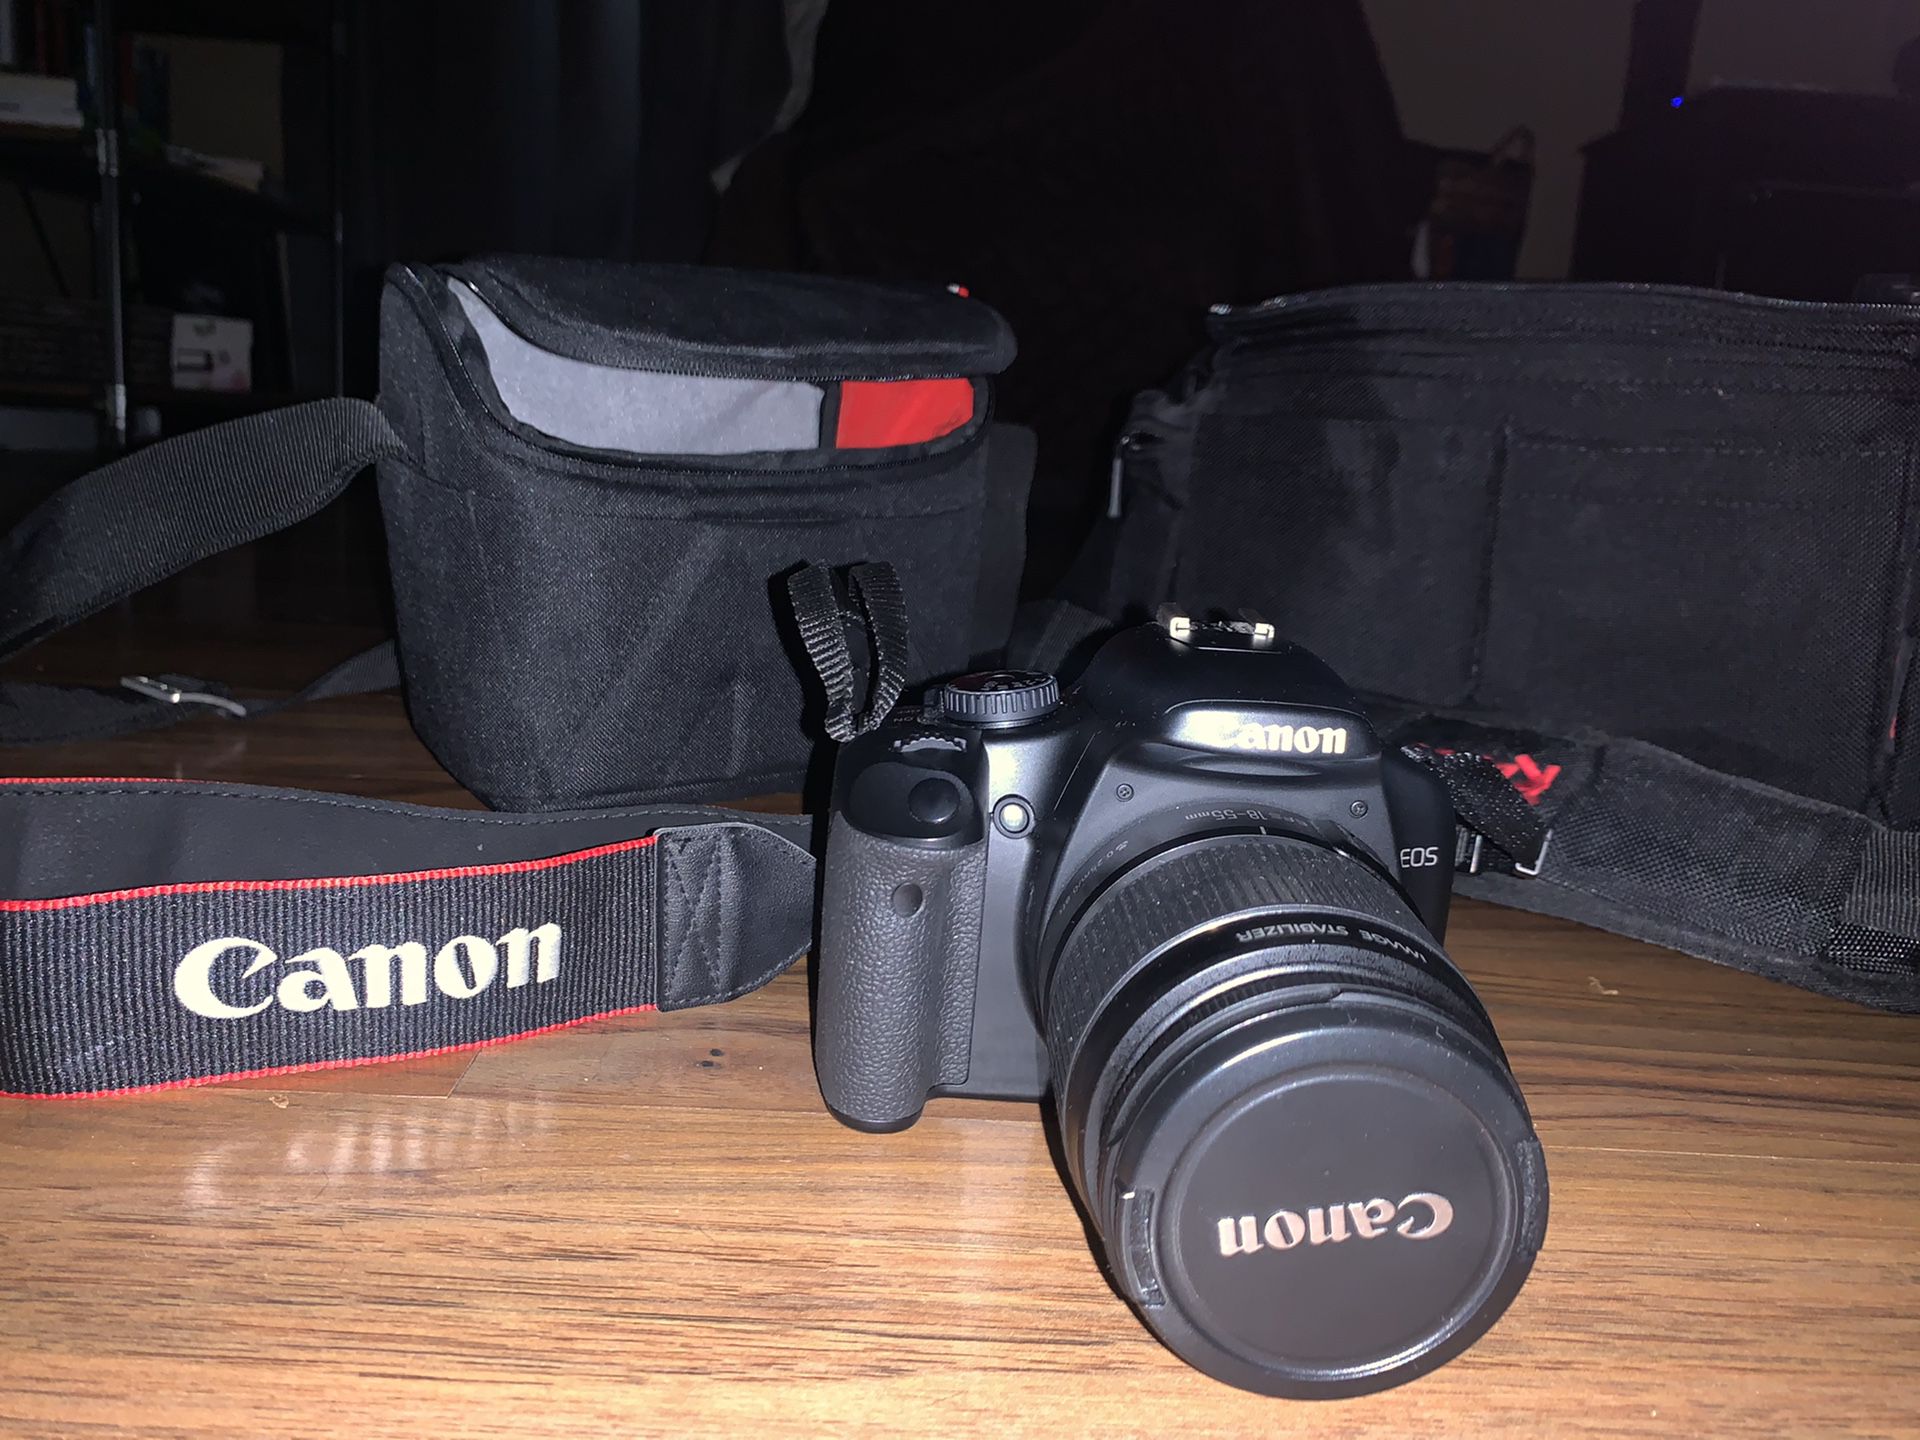 Canon Rebel EOS 450D camera